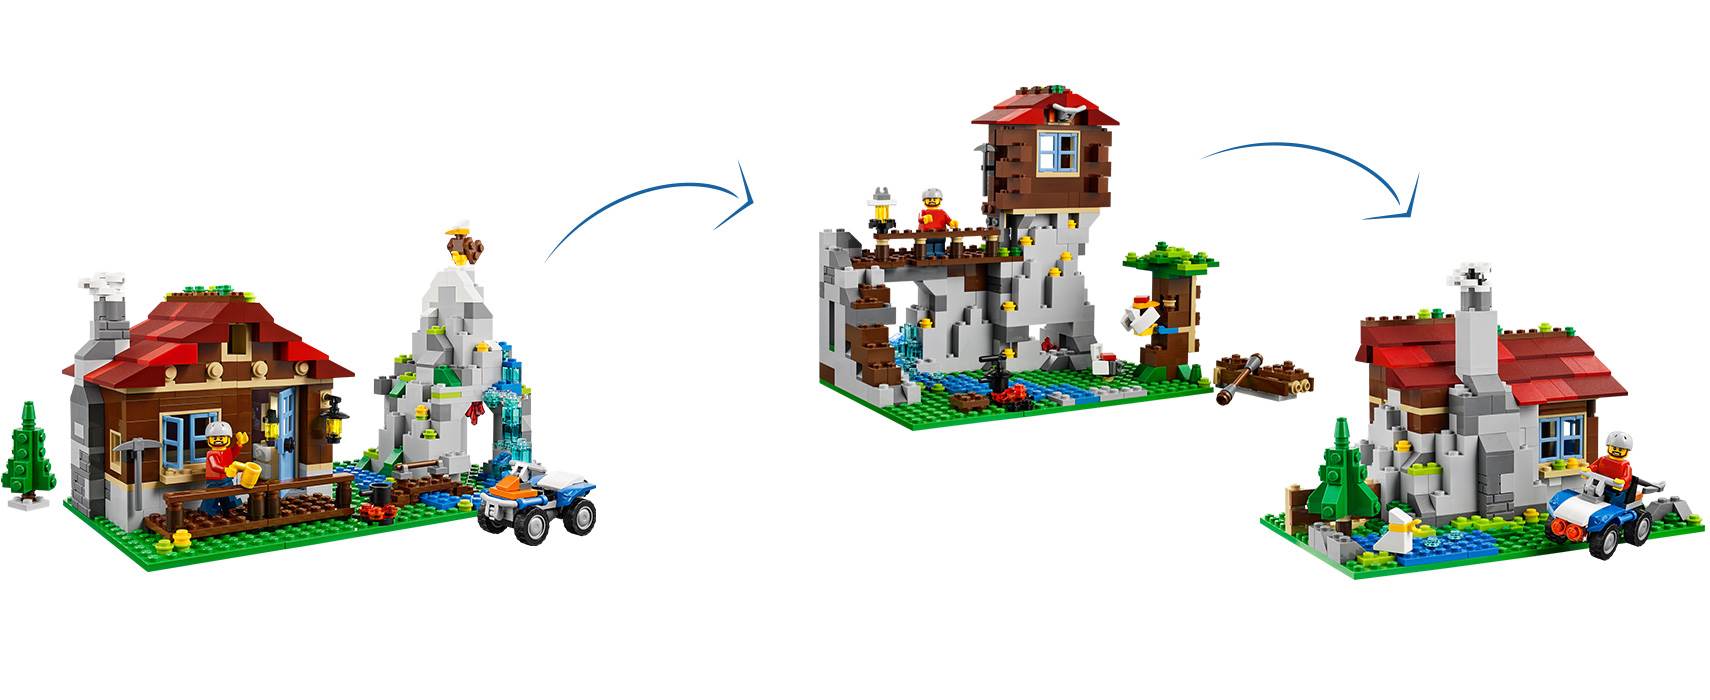 LEGO Creator 31025 - Mountain Hut - image 4 of 6